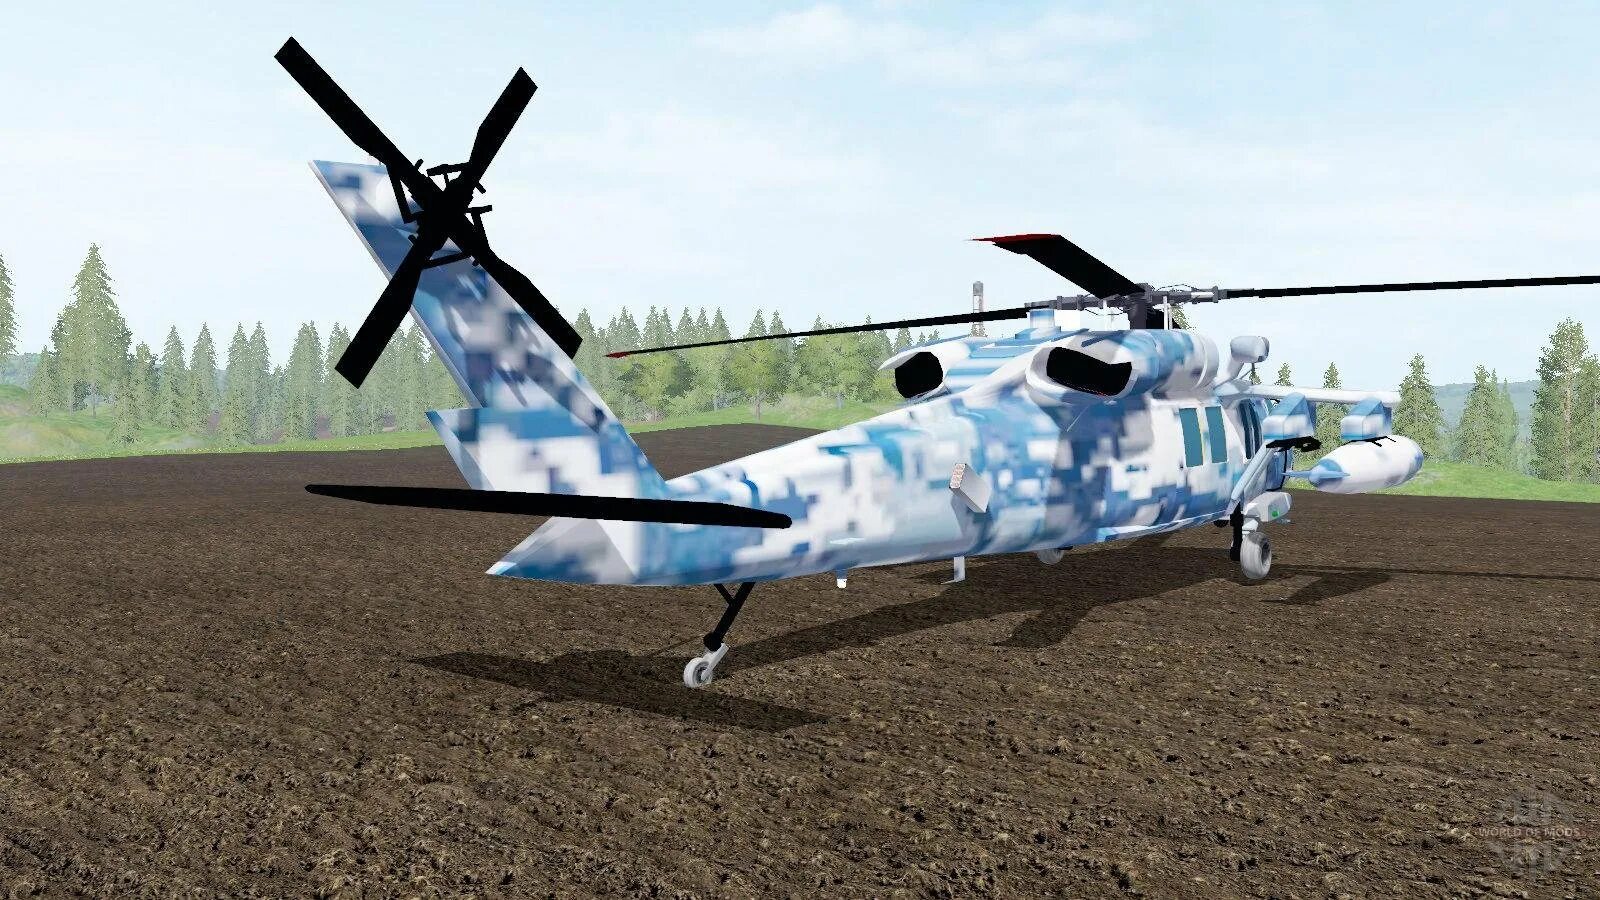 FS 19 вертолет. Sikorsky uh-60l Black Hawk. Вертолёты для ФС 19. Farming Simulator 17 вертолет.